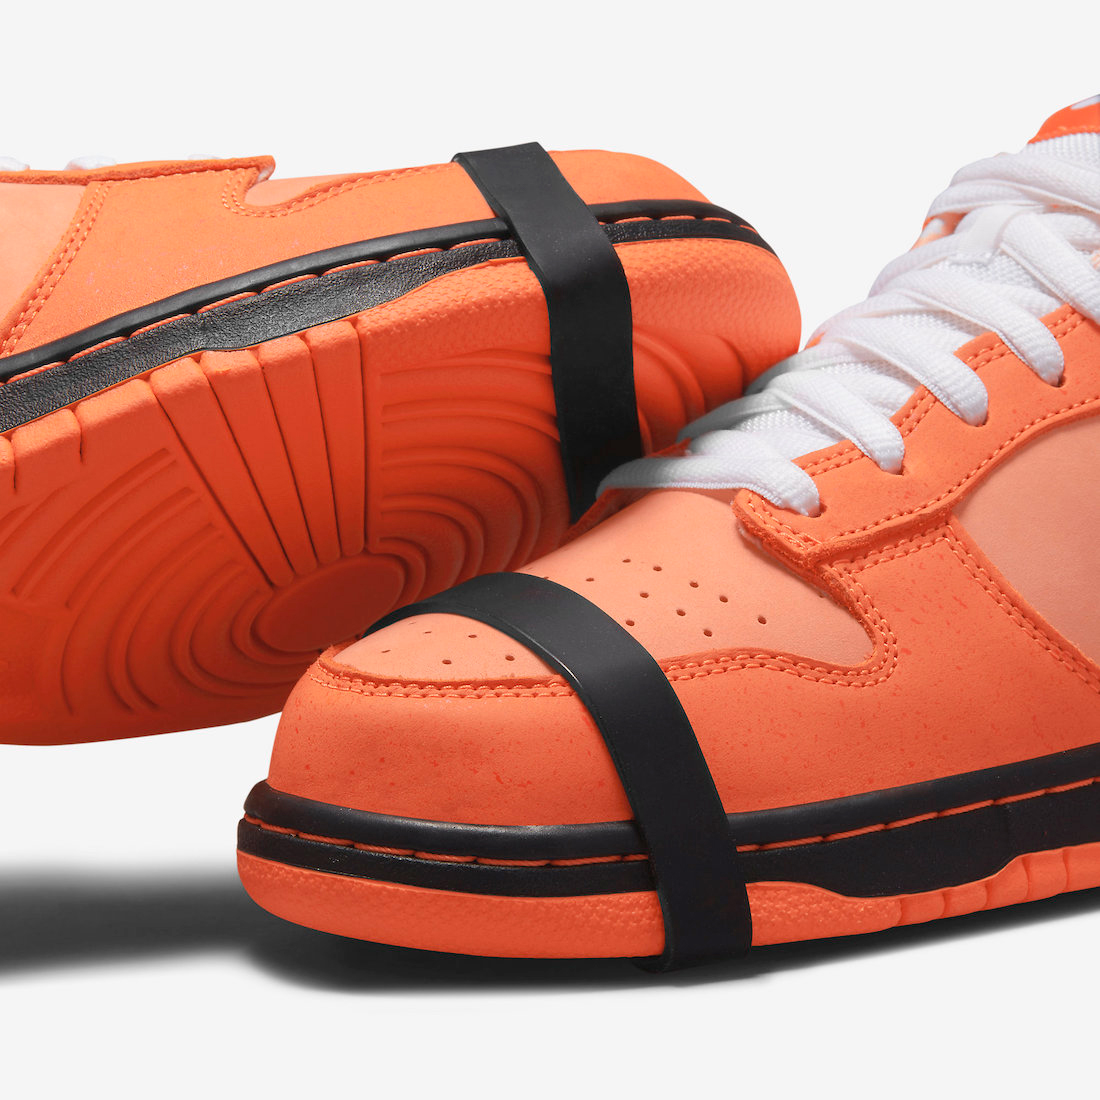 Concepts-Nike-SB-Dunk-Low-Orange-Lobster-9